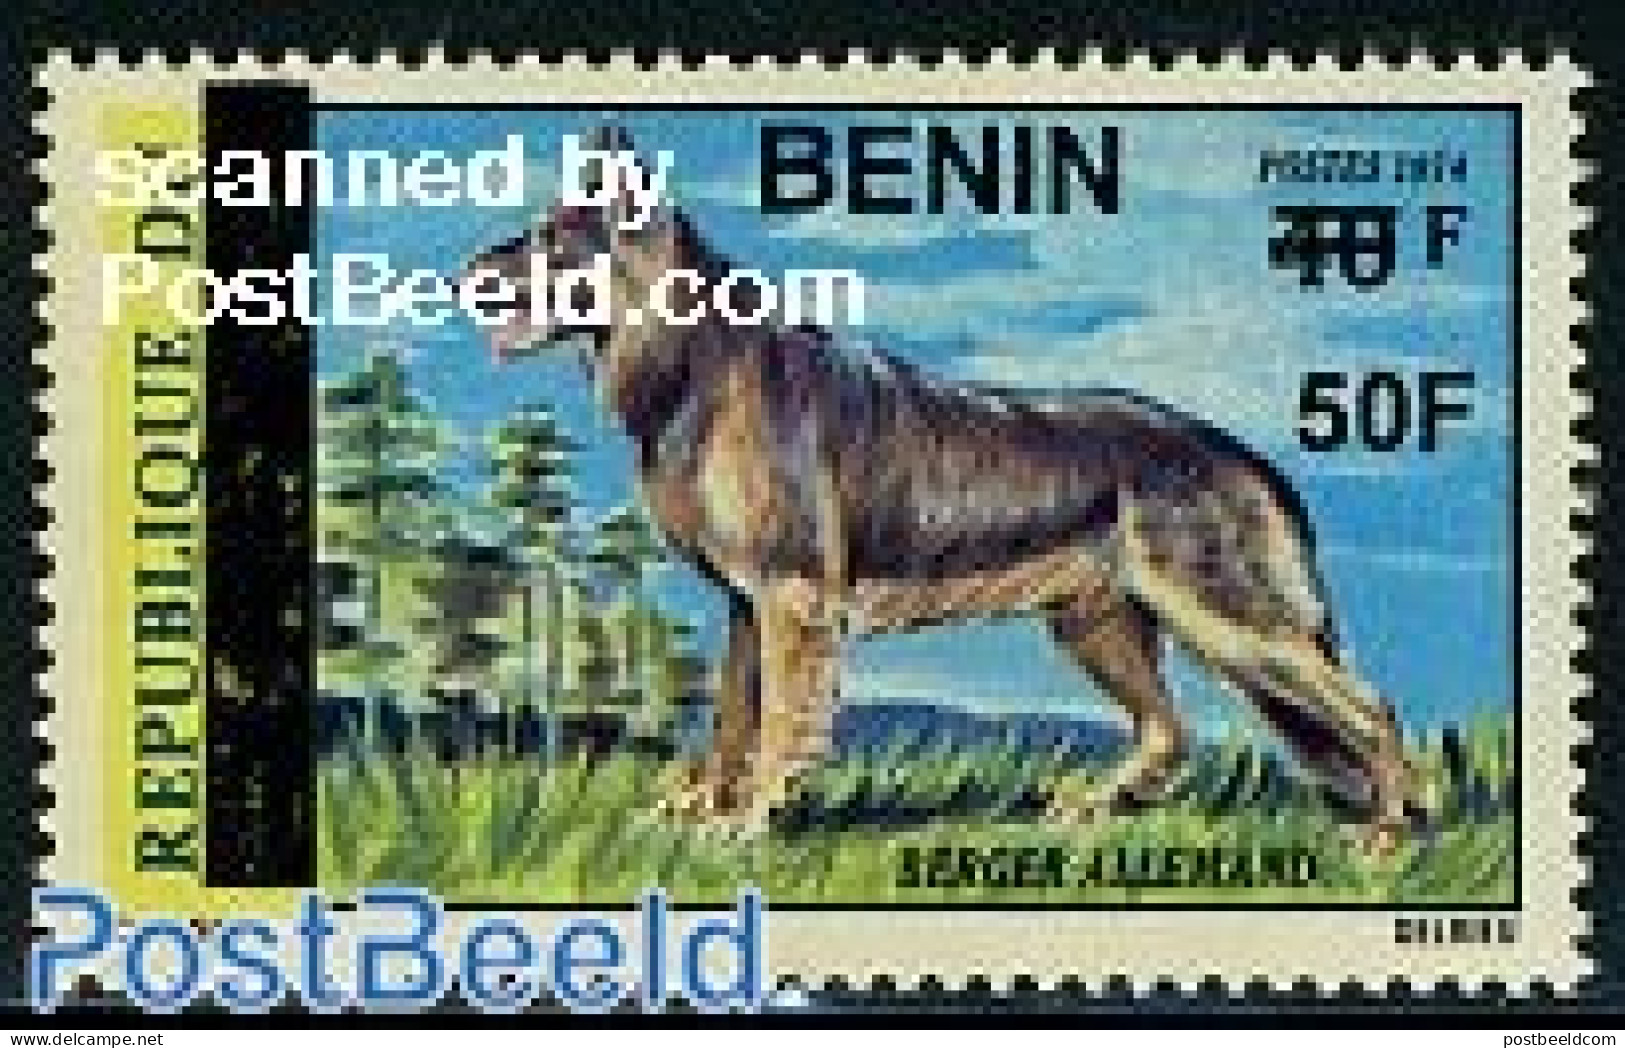 Benin 2009 Dog Overprint 1v, Mint NH, Nature - Neufs